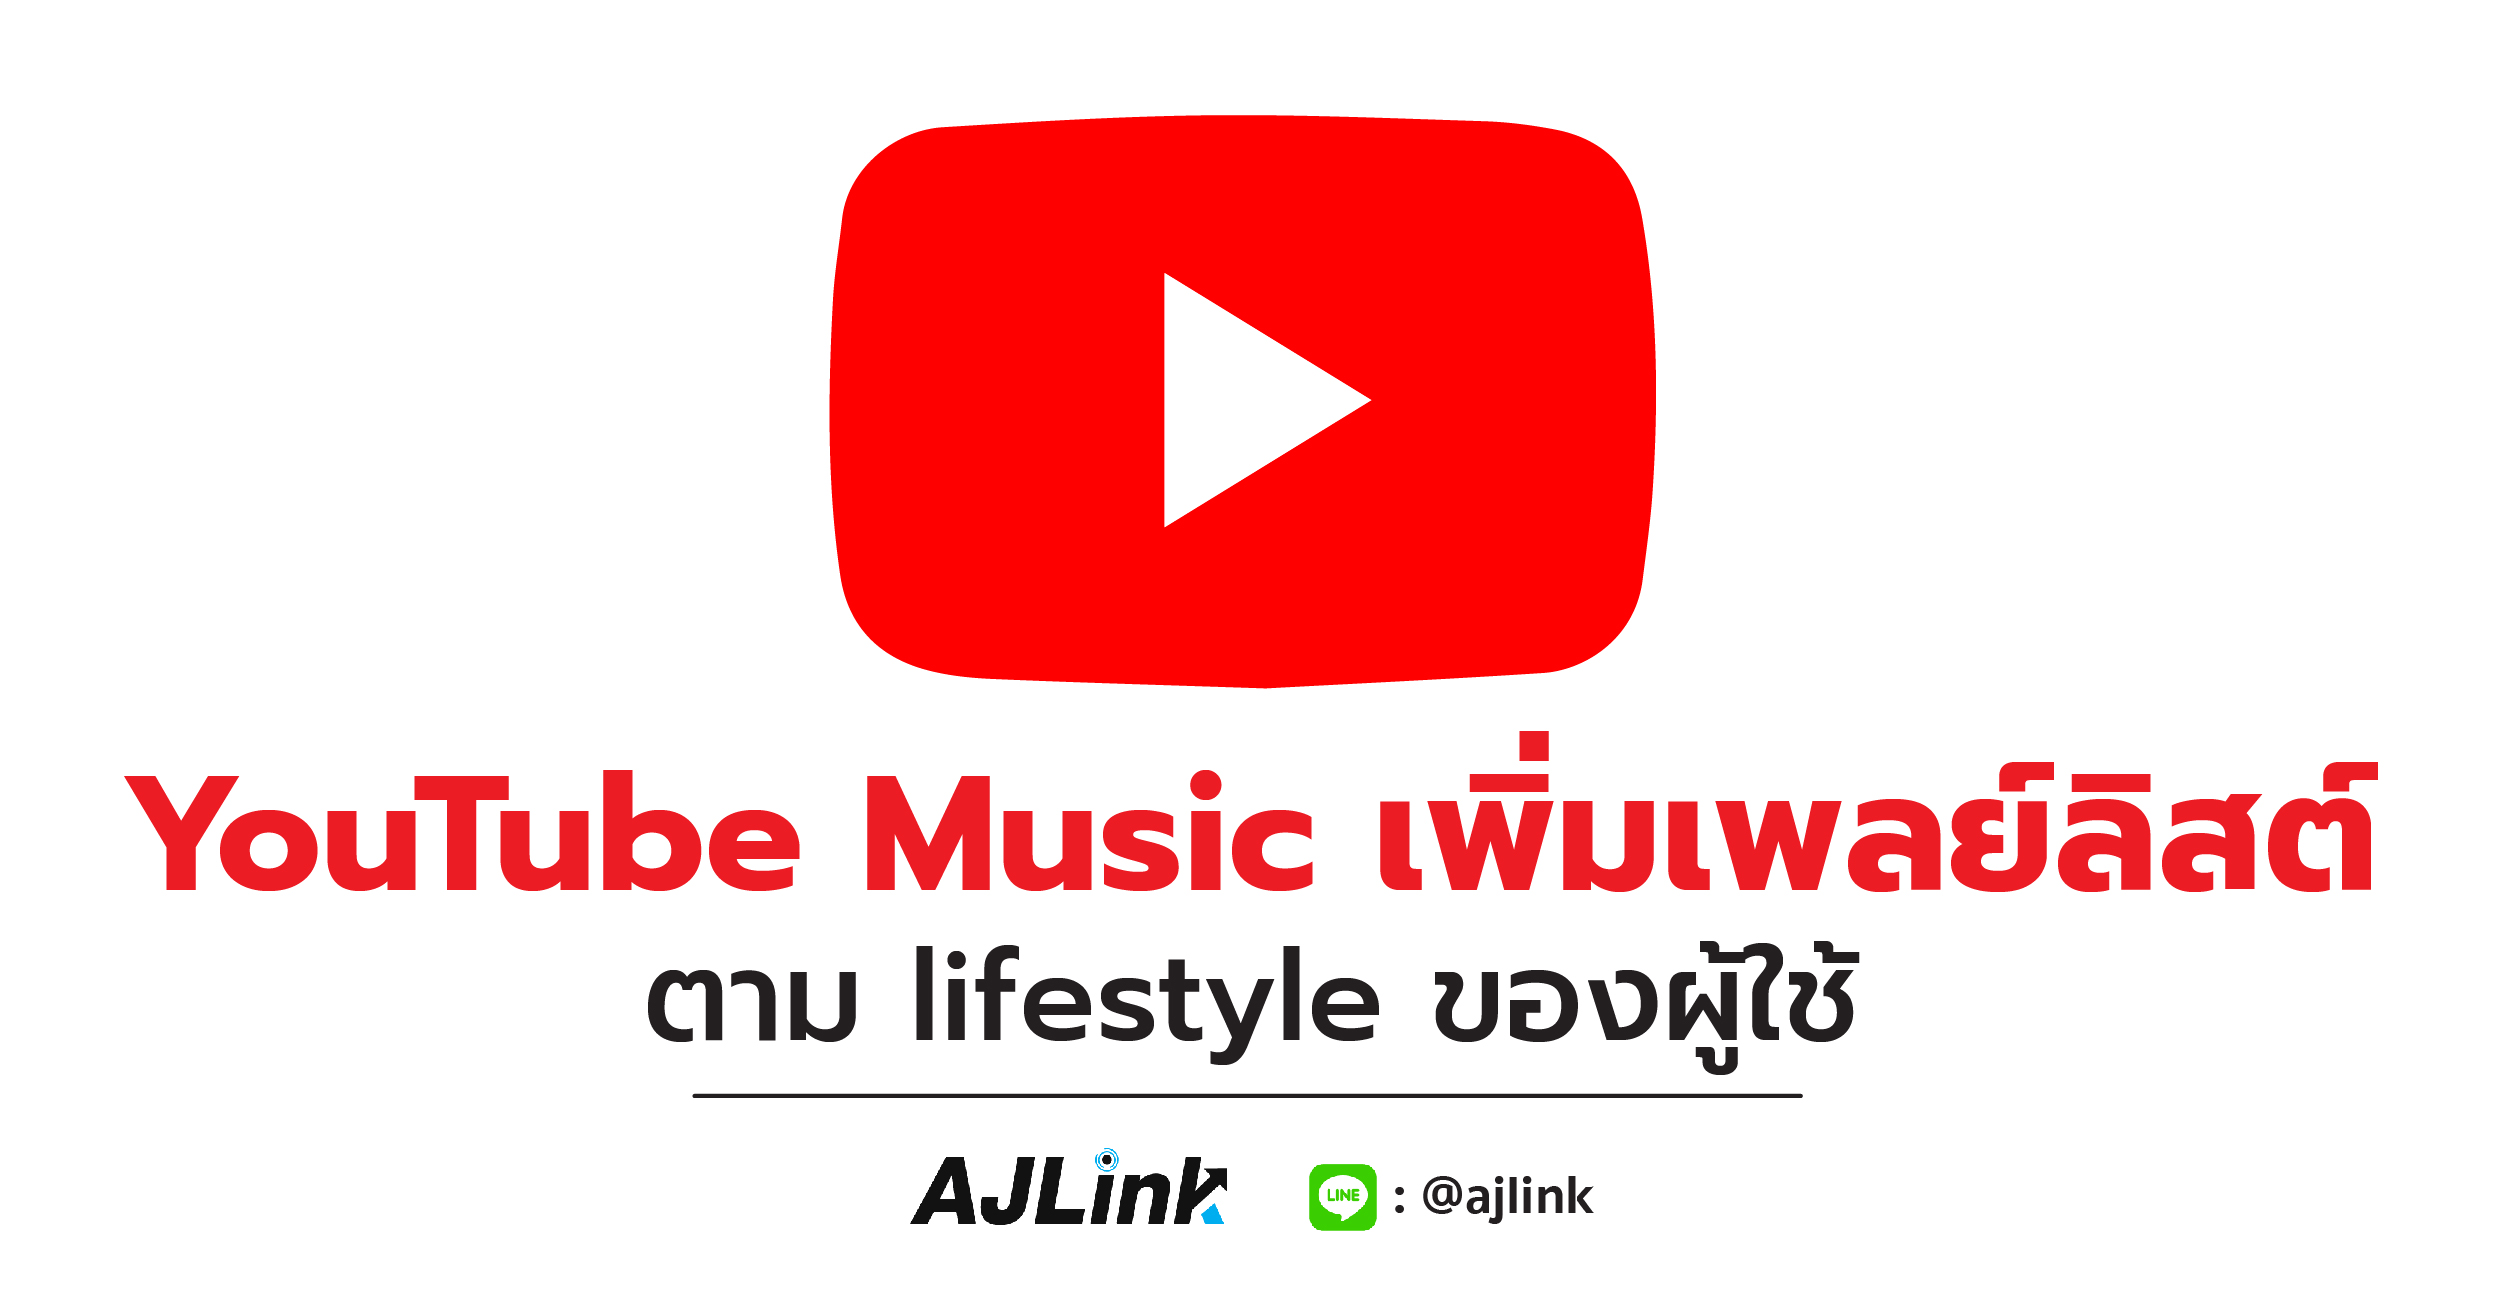 YouTube Music เพิ่มเพลย์ลิสต์ตาม lifestyle ของผู้ใช้